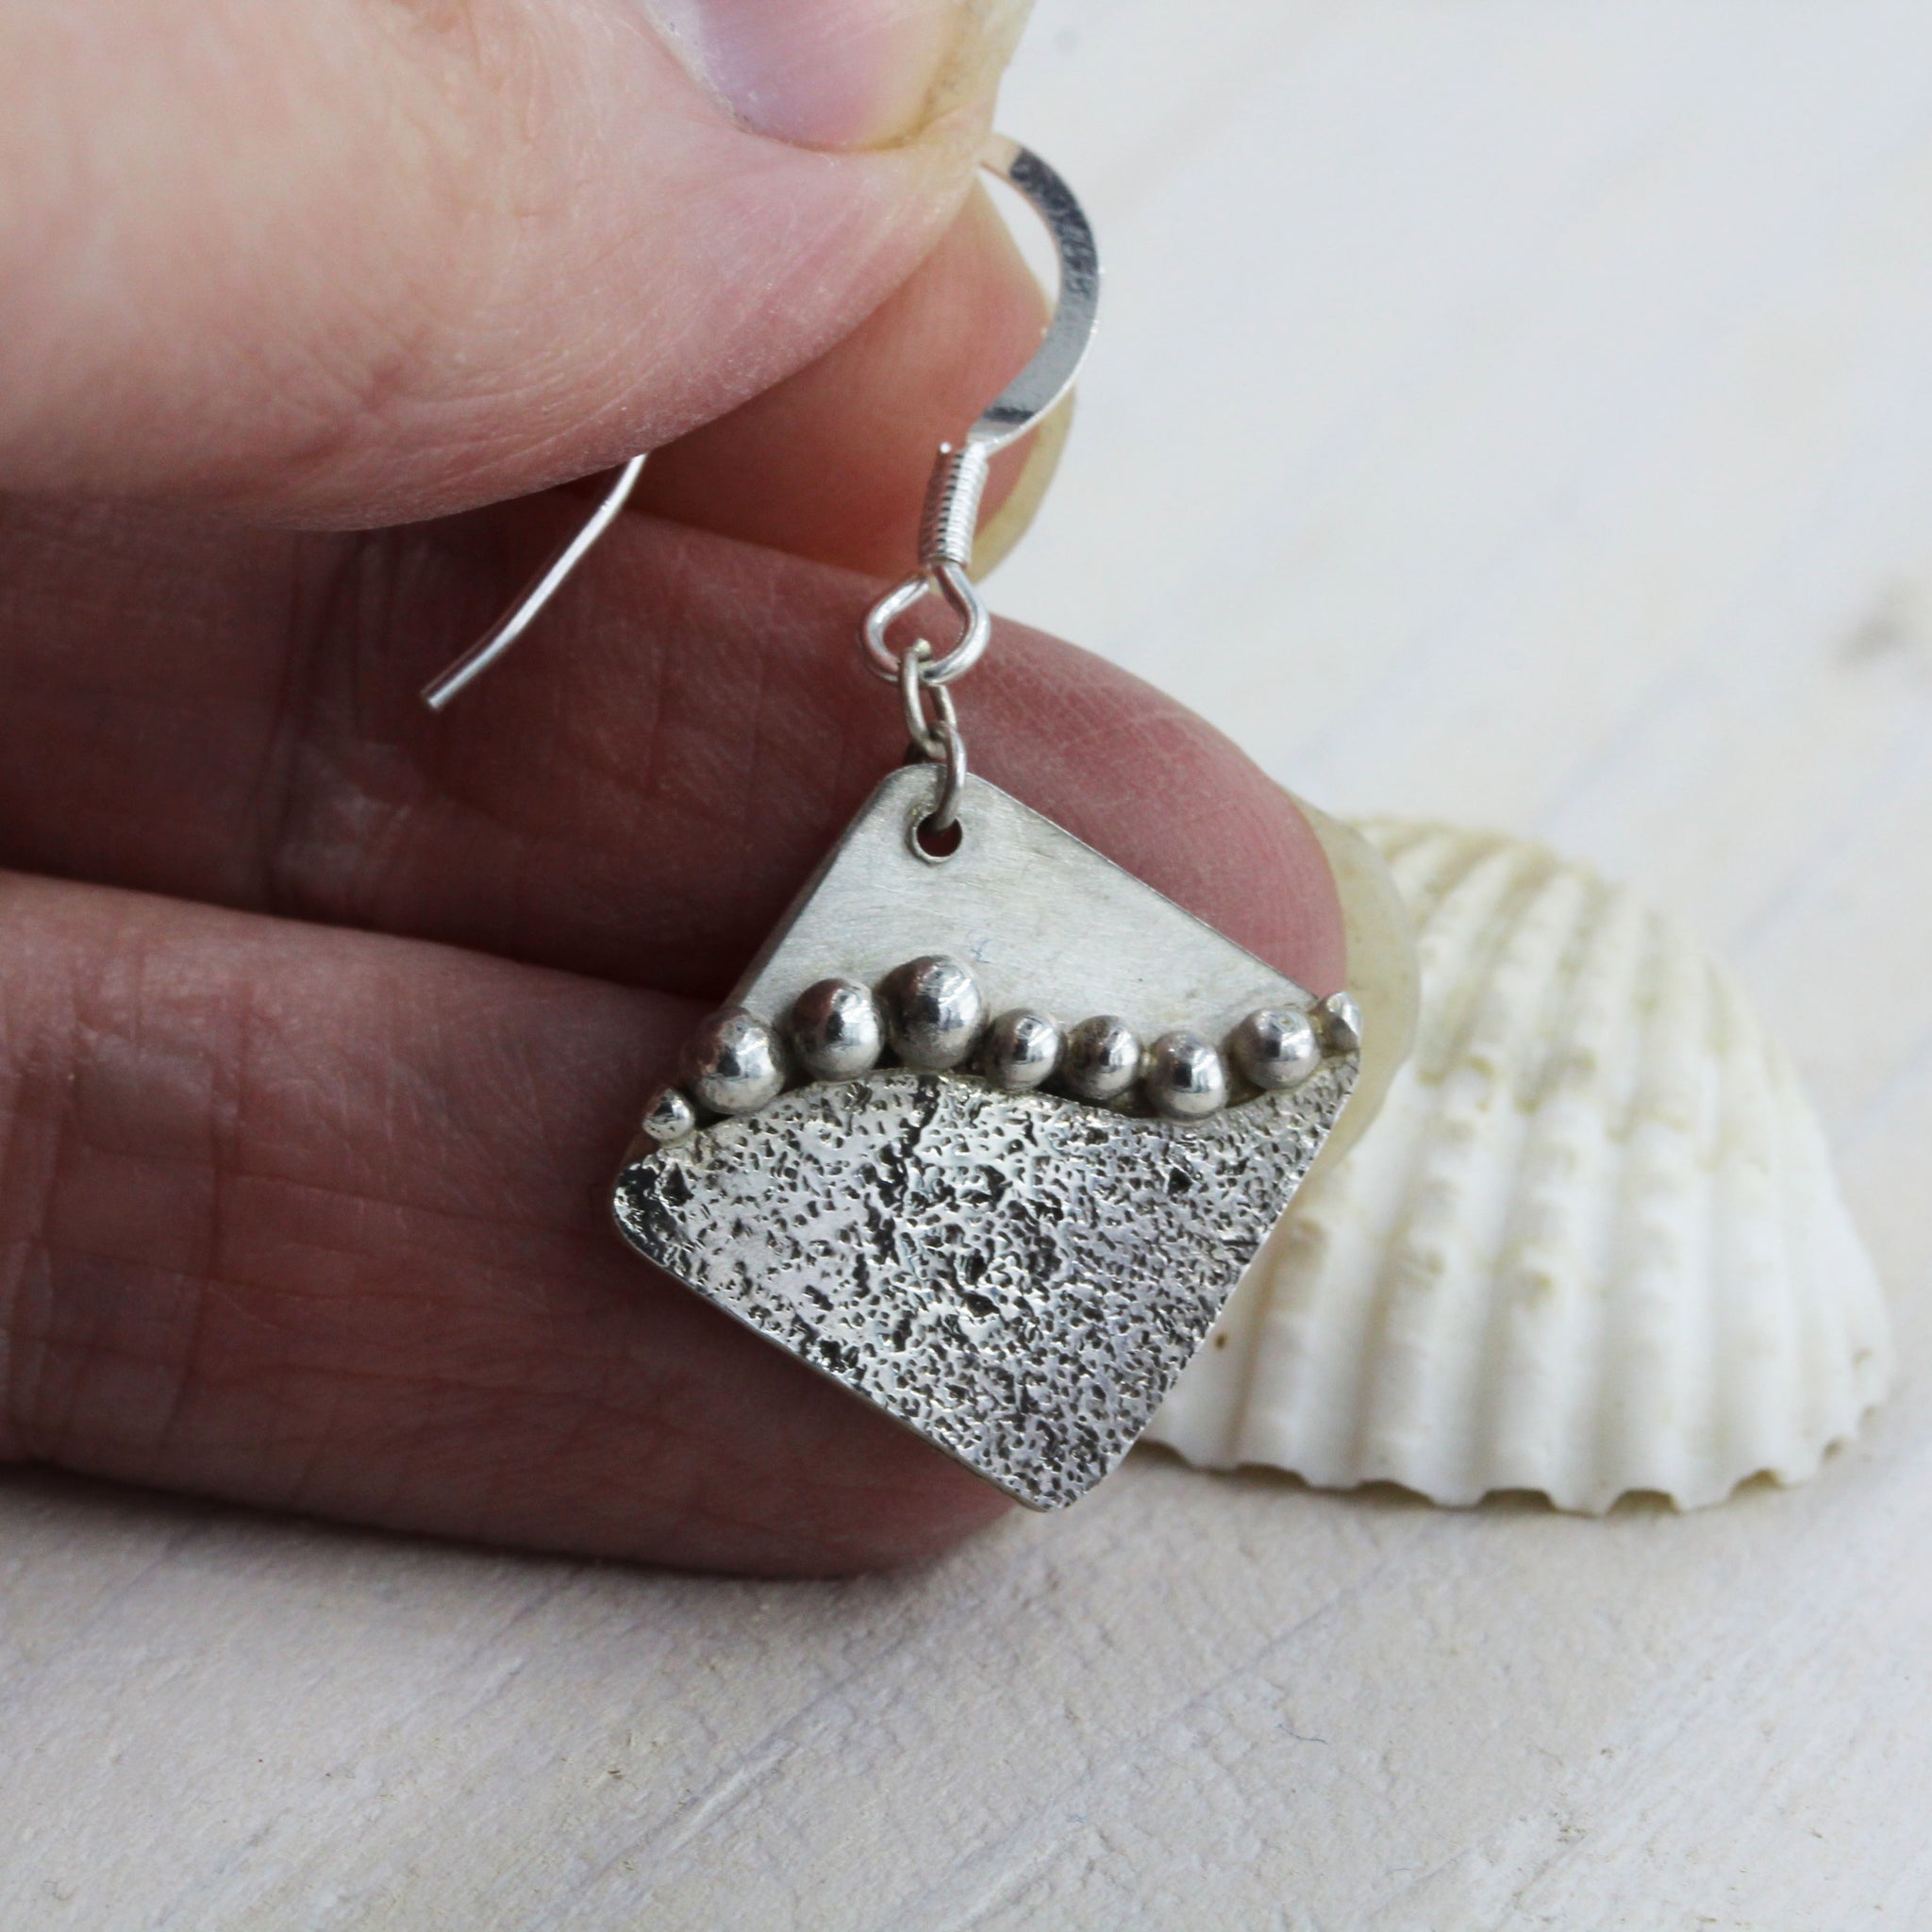 Handmade sea inspired, sterling silver drop earrings